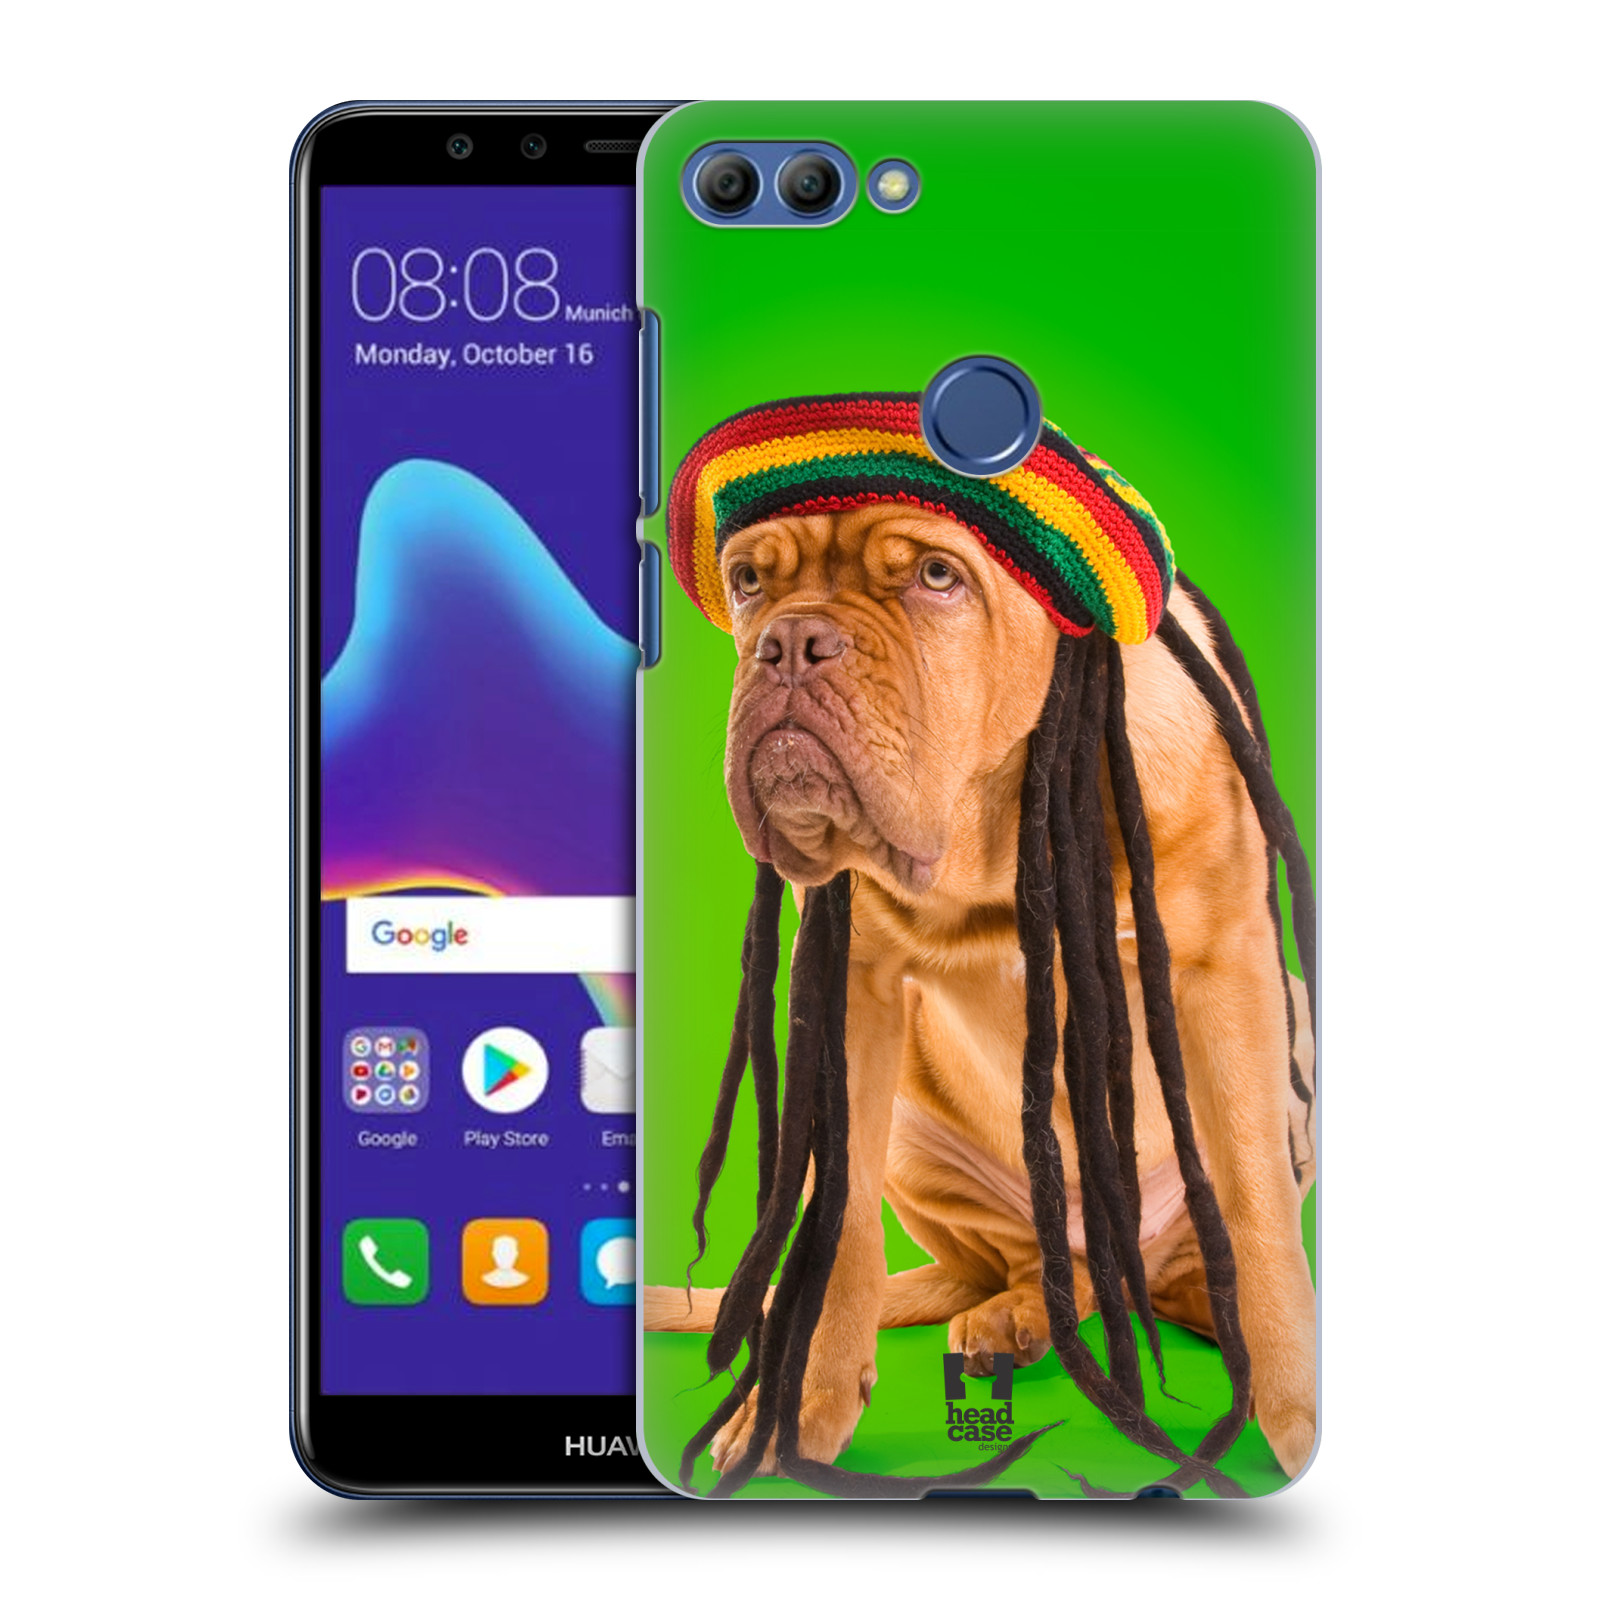 HEAD CASE plastový obal na mobil Huawei Y9 2018 vzor Legrační zvířátka pejsek dredy Rastafarián